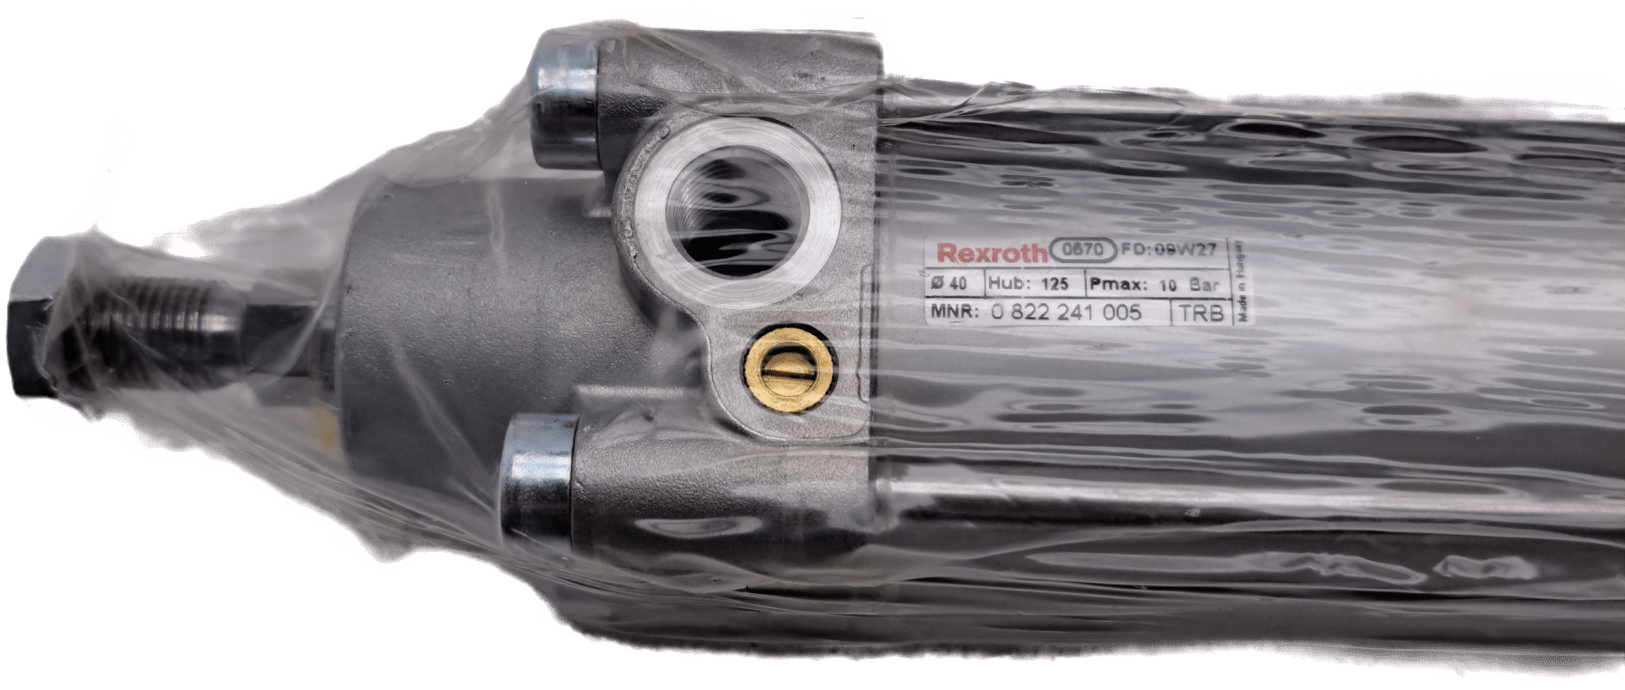 Rexroth / Bosch Hydraulikzylinder 0 822 241 005 - #product_category# | Klenk Maschinenhandel